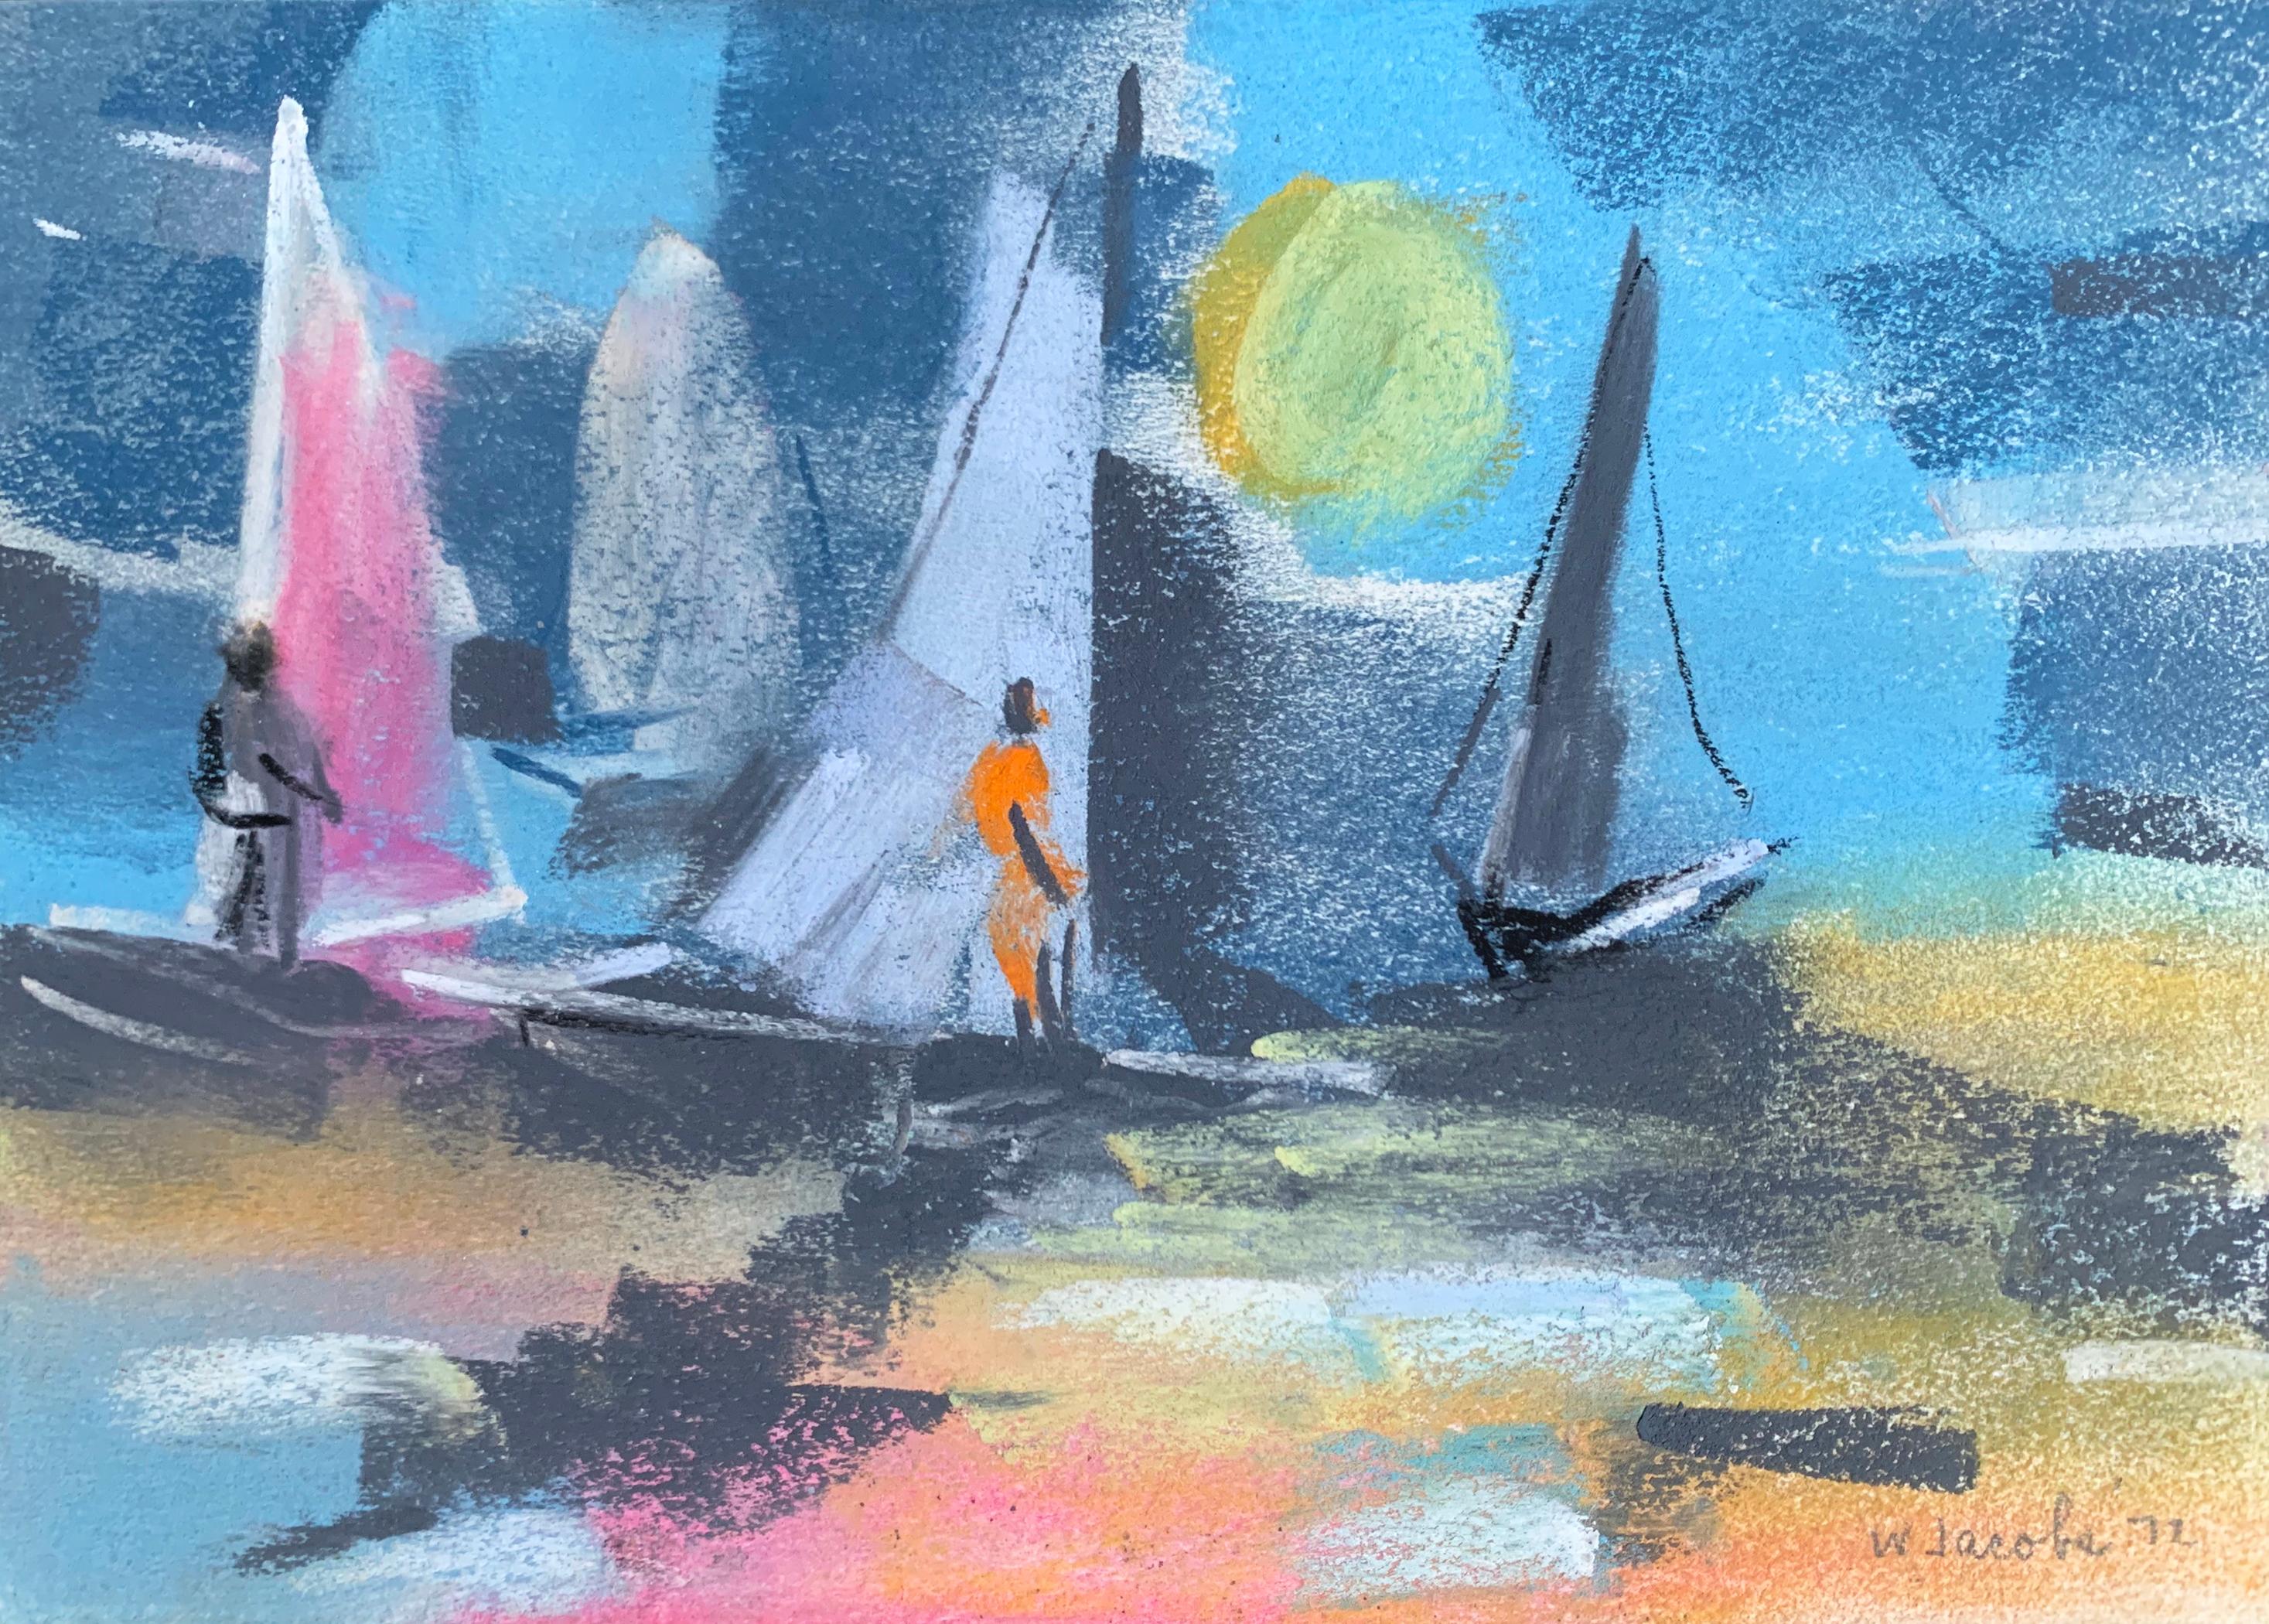 William Jacobs "Windsurfing at Sunset", original pastel on paper